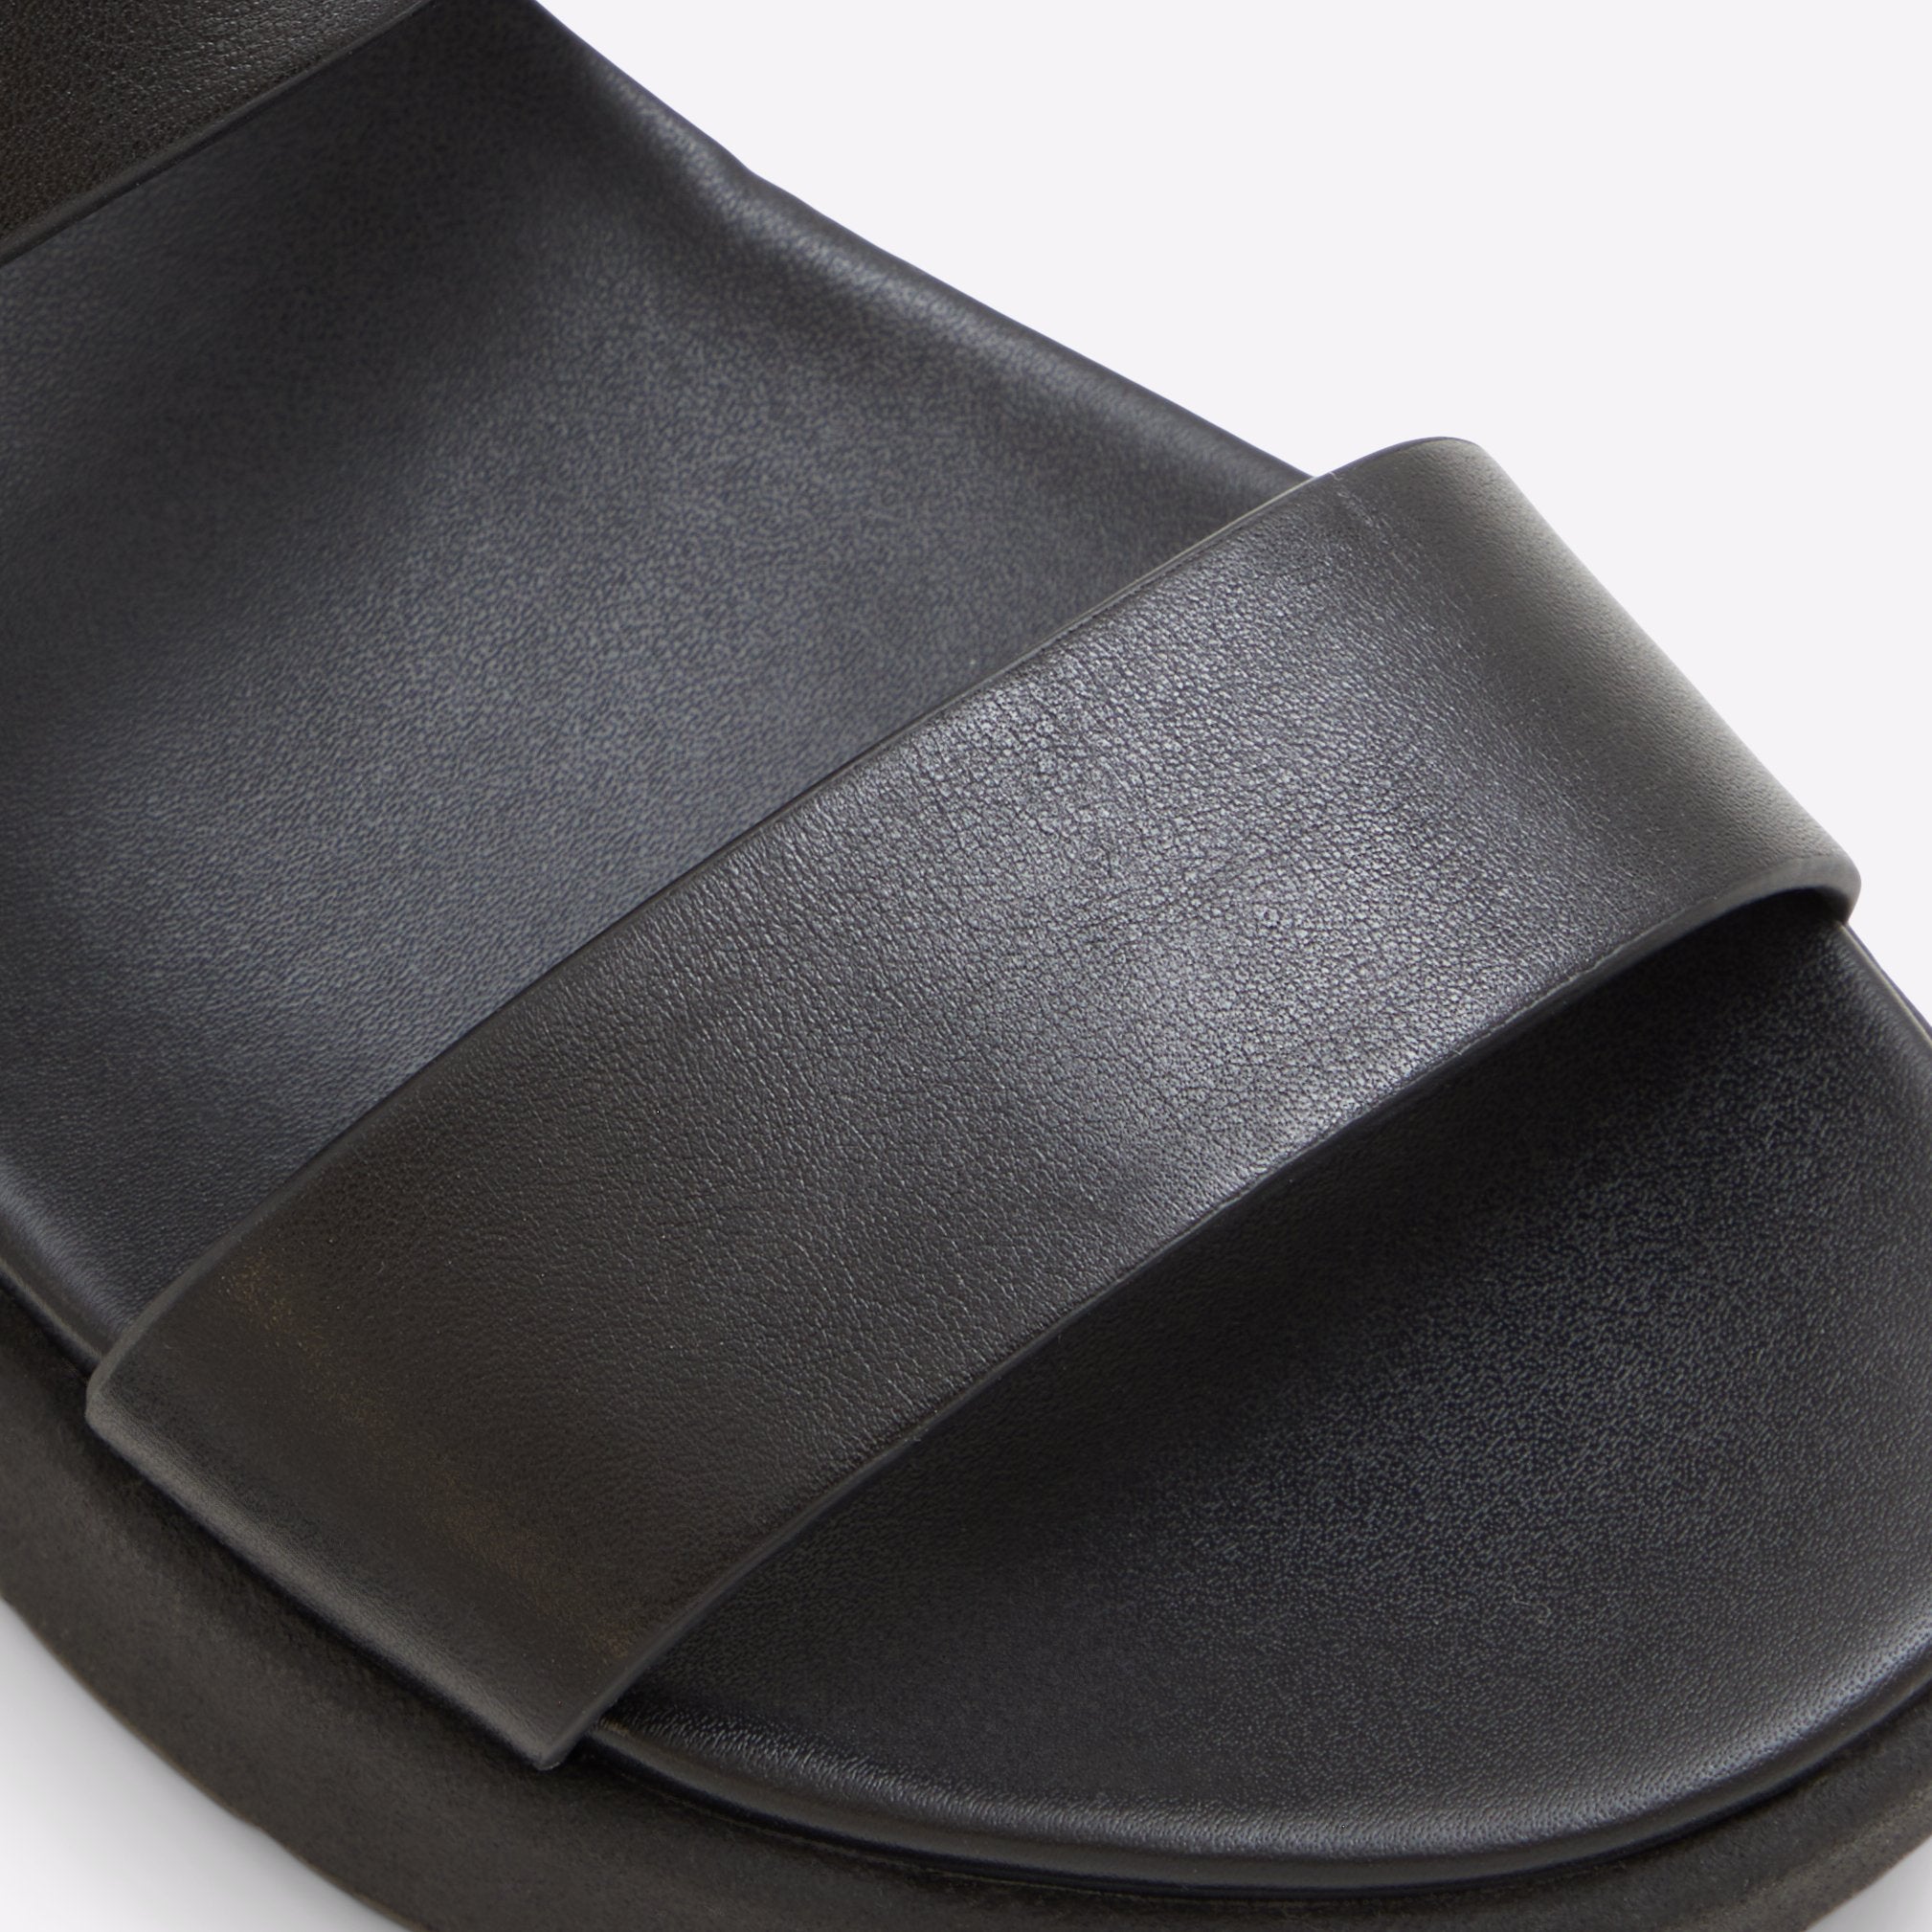 ALDO UK | ALDO Shoes, Boots, Sandals, Handbags & Accessories